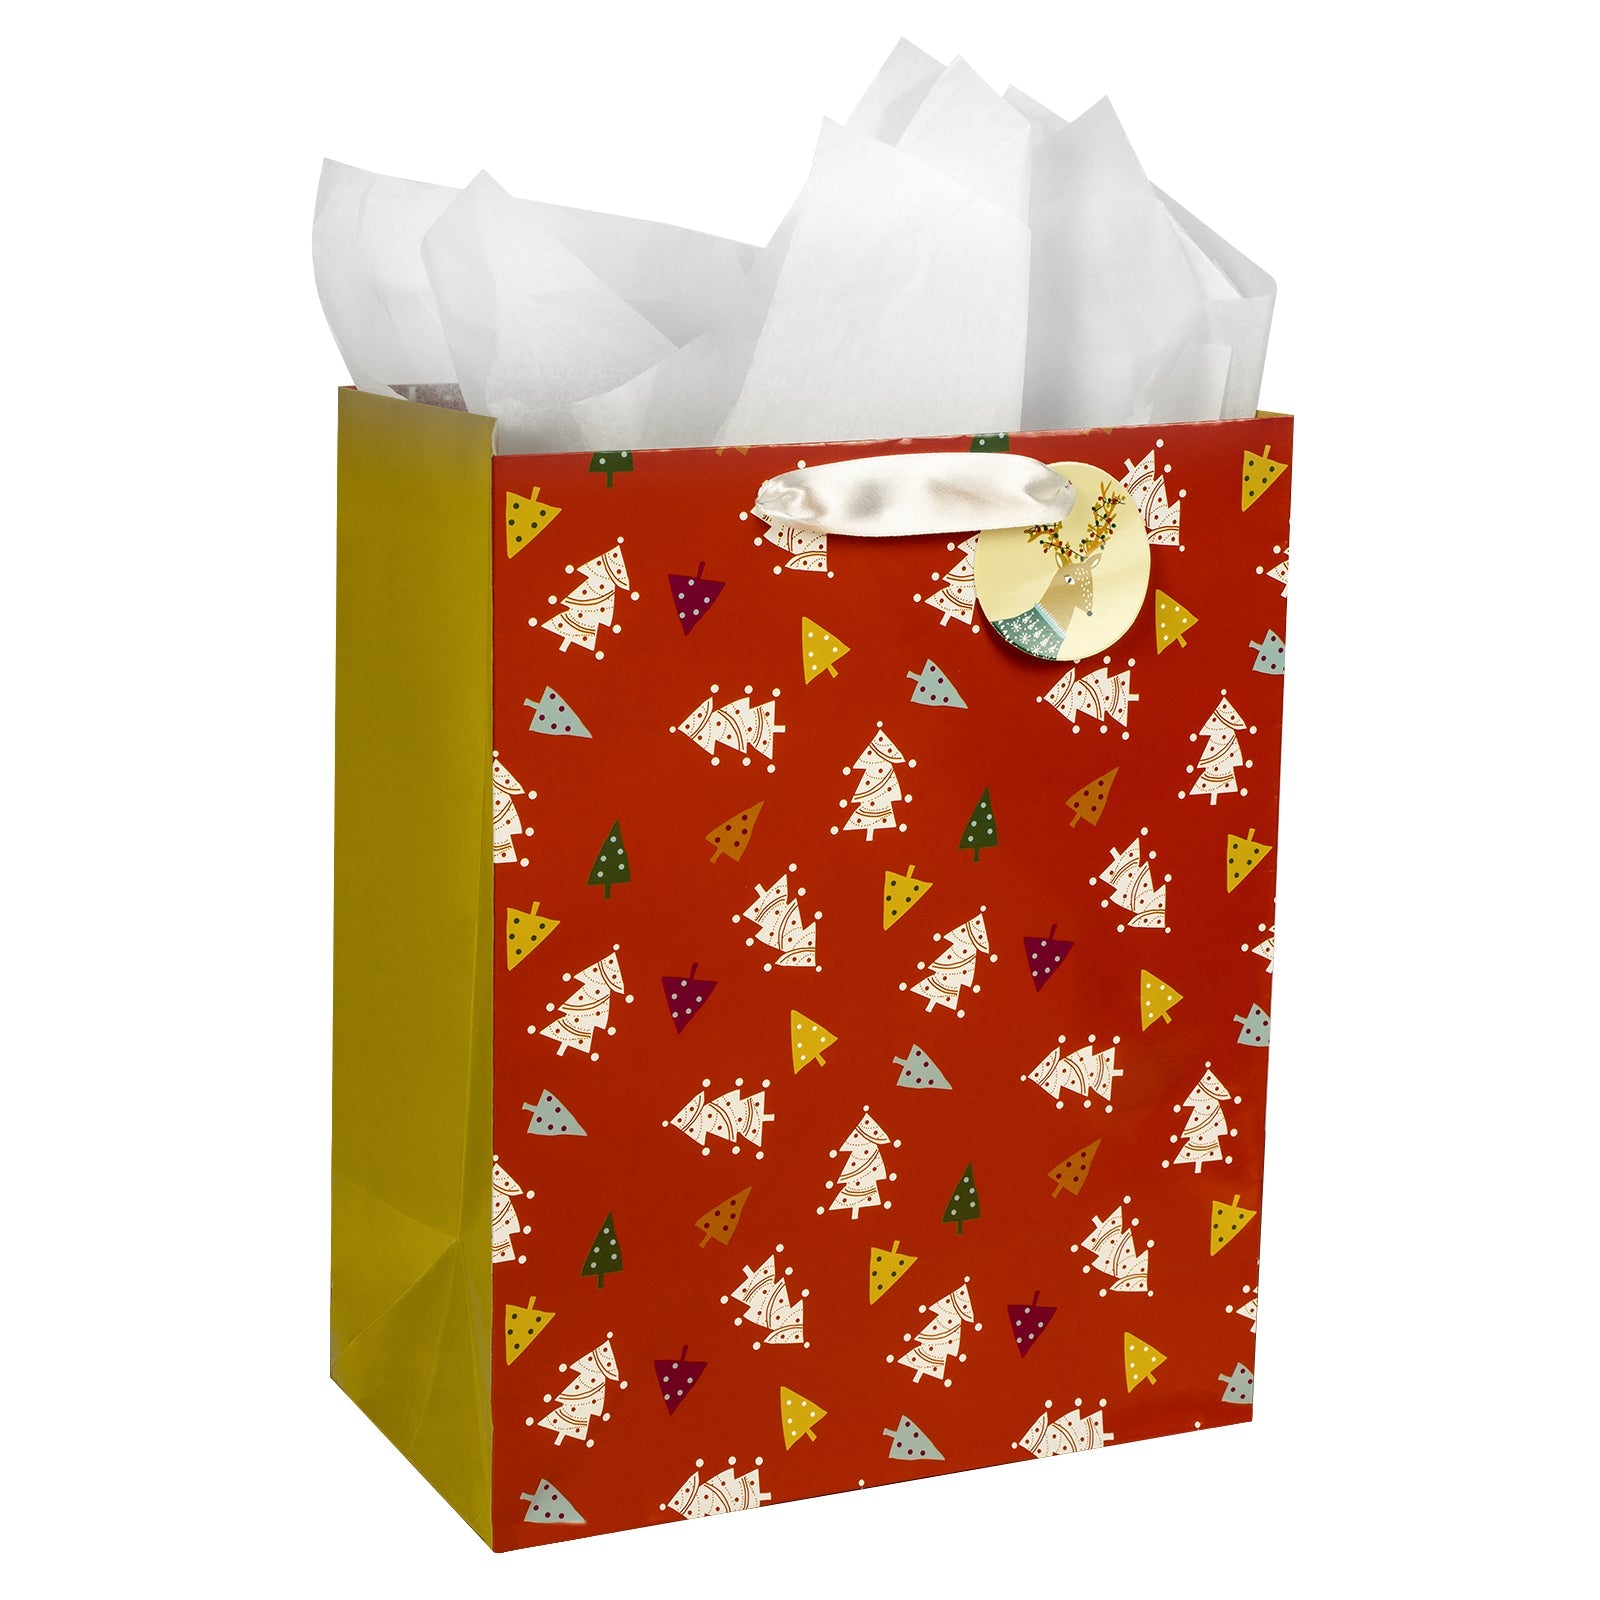 Assort Large Christmas Gift Bag Deer 9 Pack 10"x5"x13"